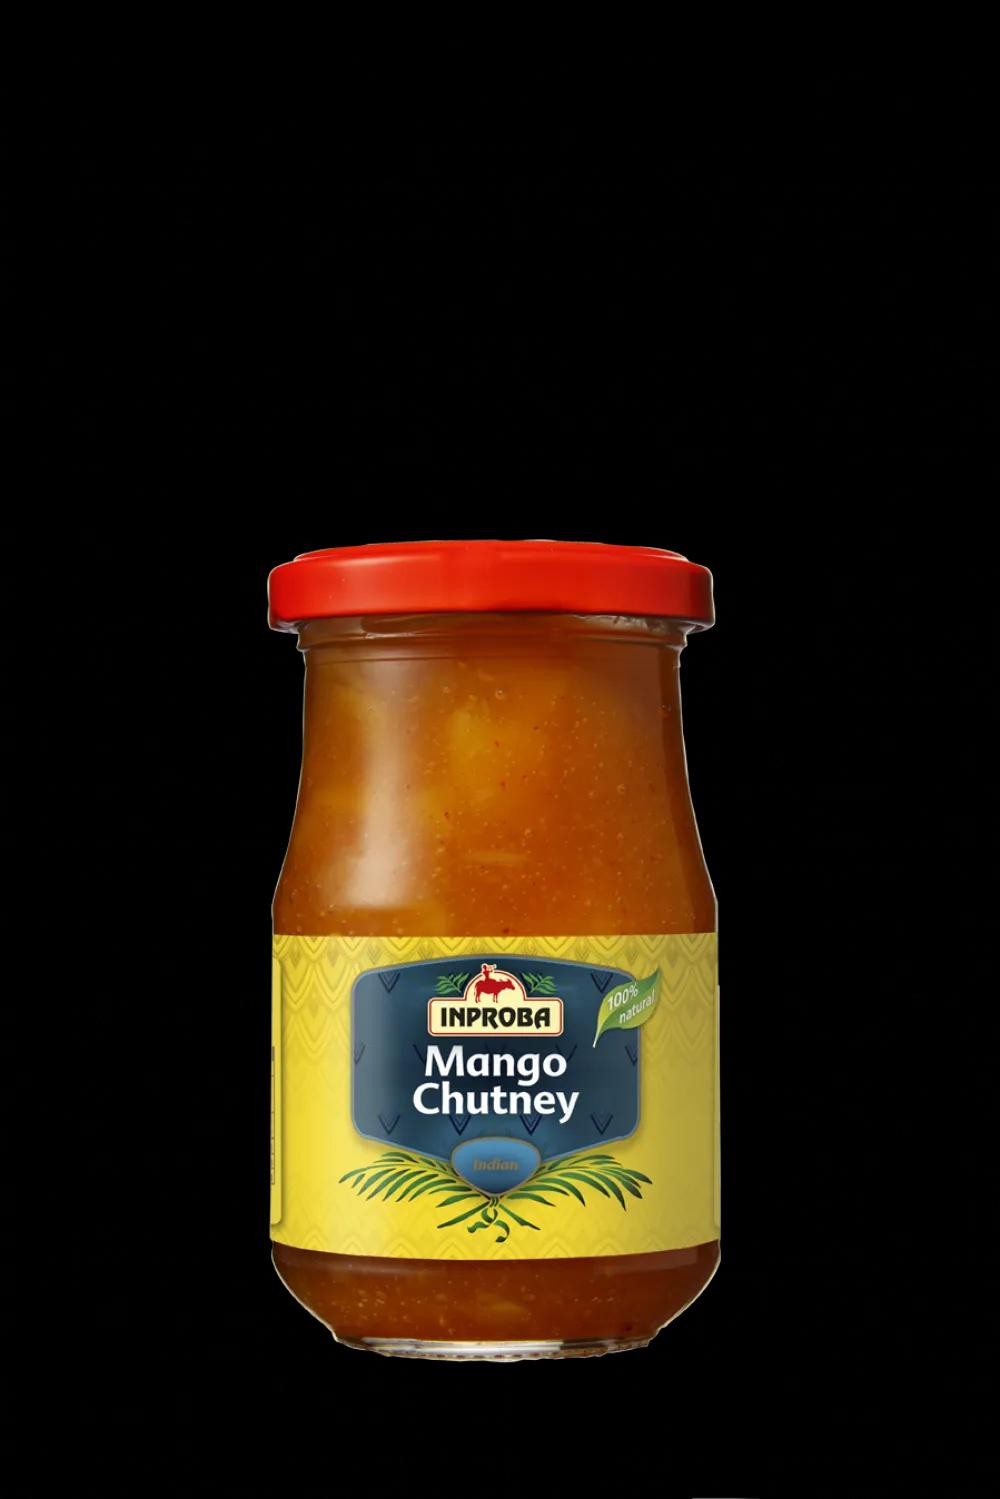 Mango Chutney - Inproba - Oriental Foods